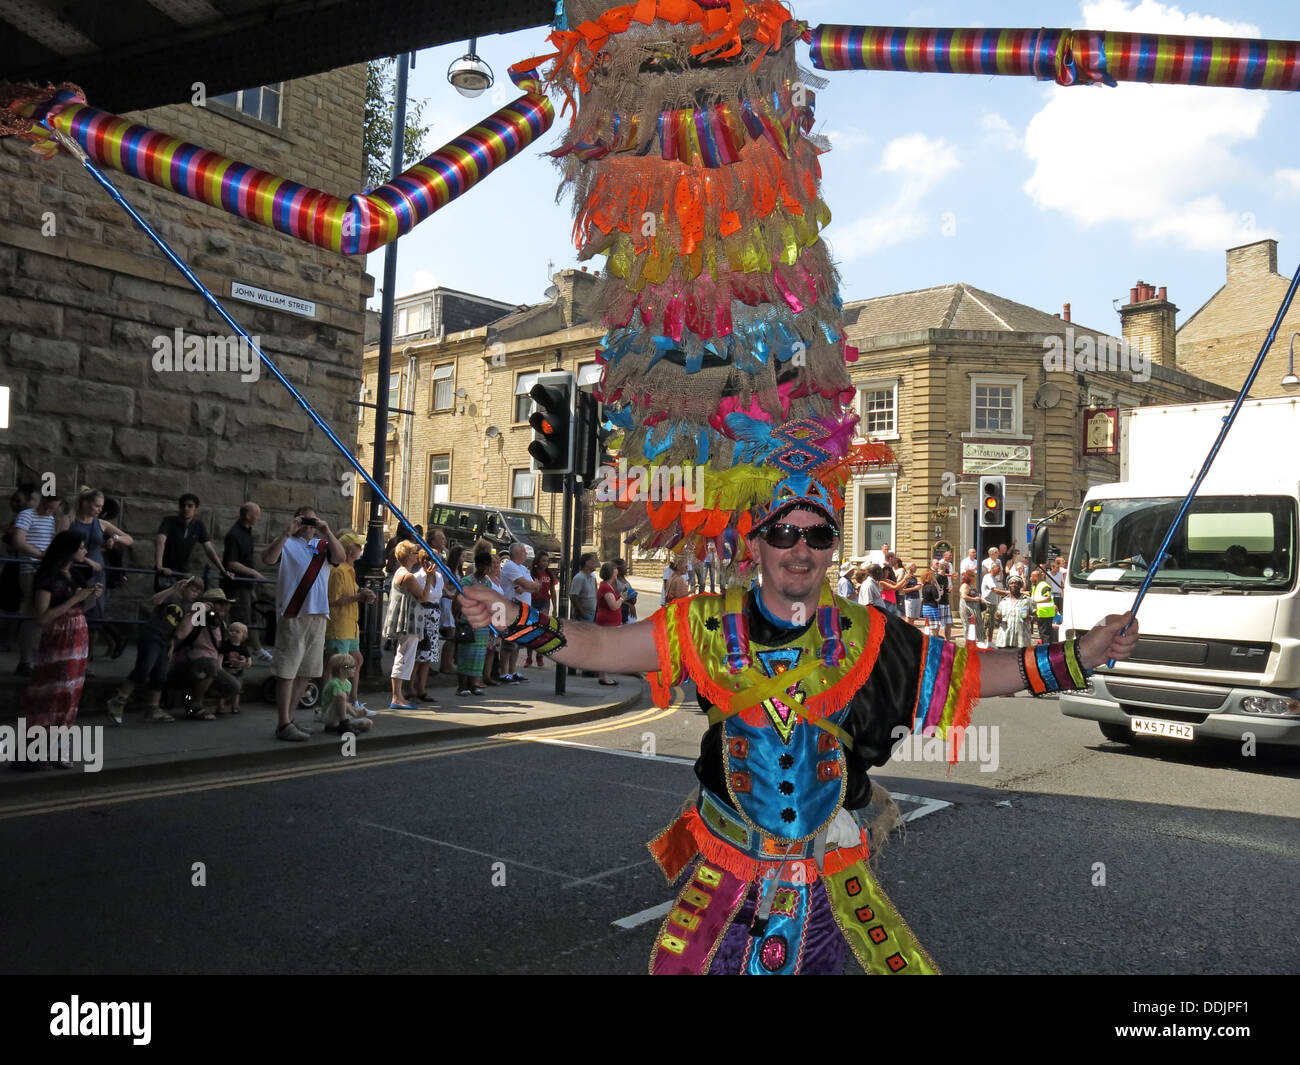 Kostümierte Tänzer unter Eisenbahnbrücke aus Huddersfield Karneval 2013 Afrika Karibik Parade Straßenfest Stockfoto